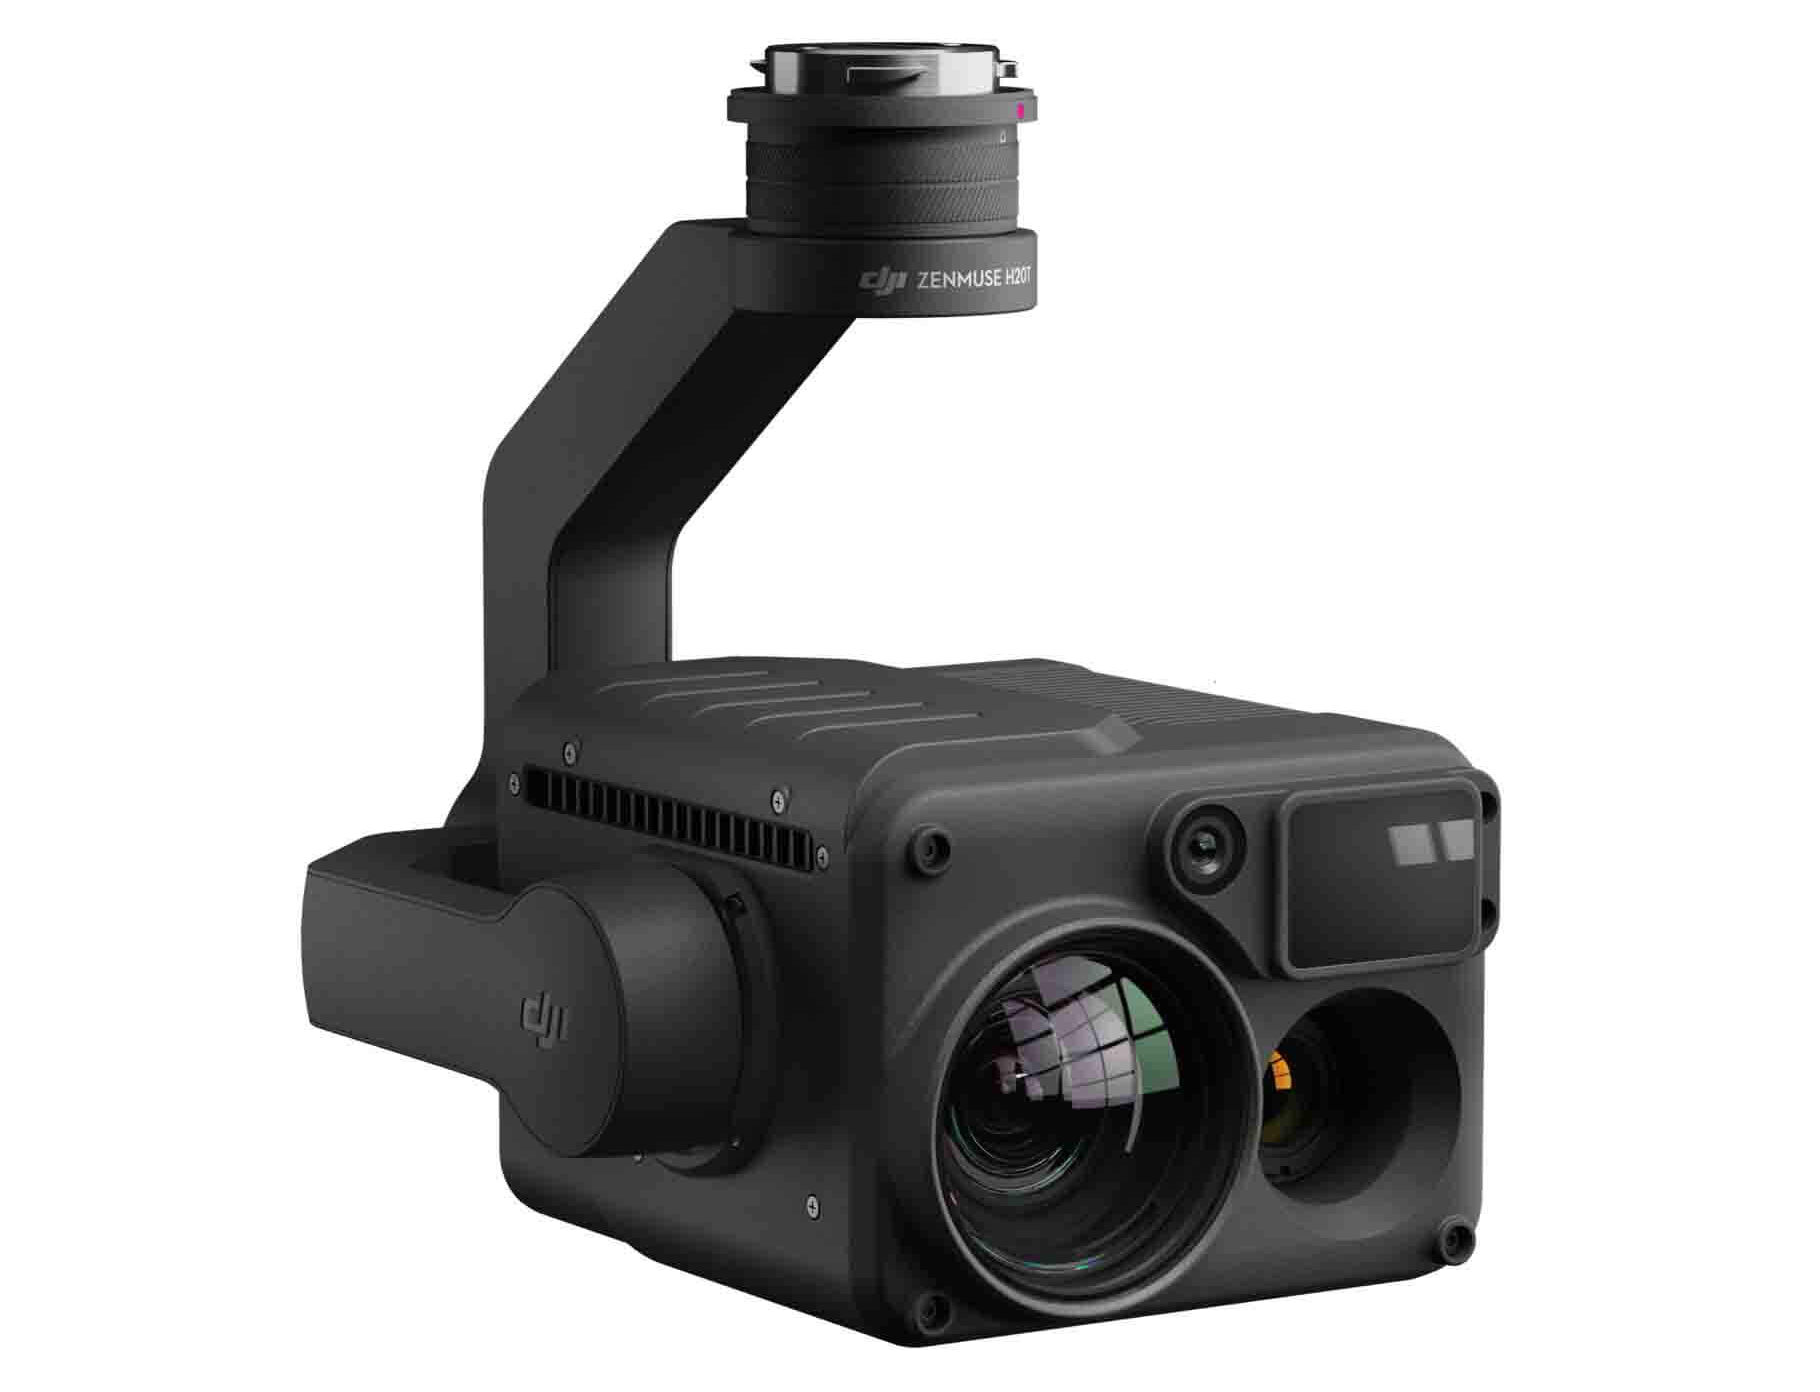 Camera Zenmuse H20 Series DJI – Camera flycam DJI